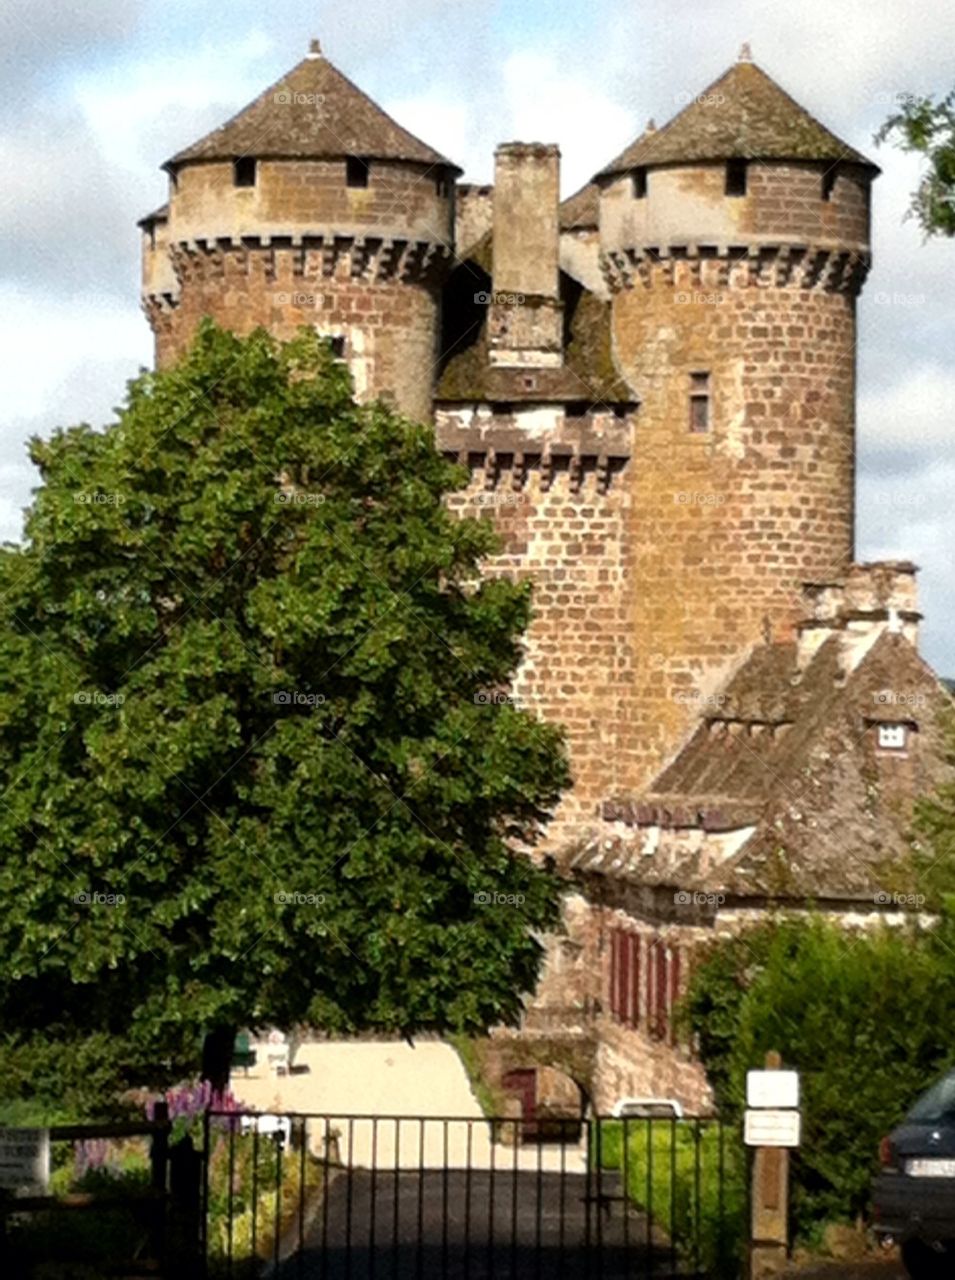 Anjony castle in Tornemire in France.